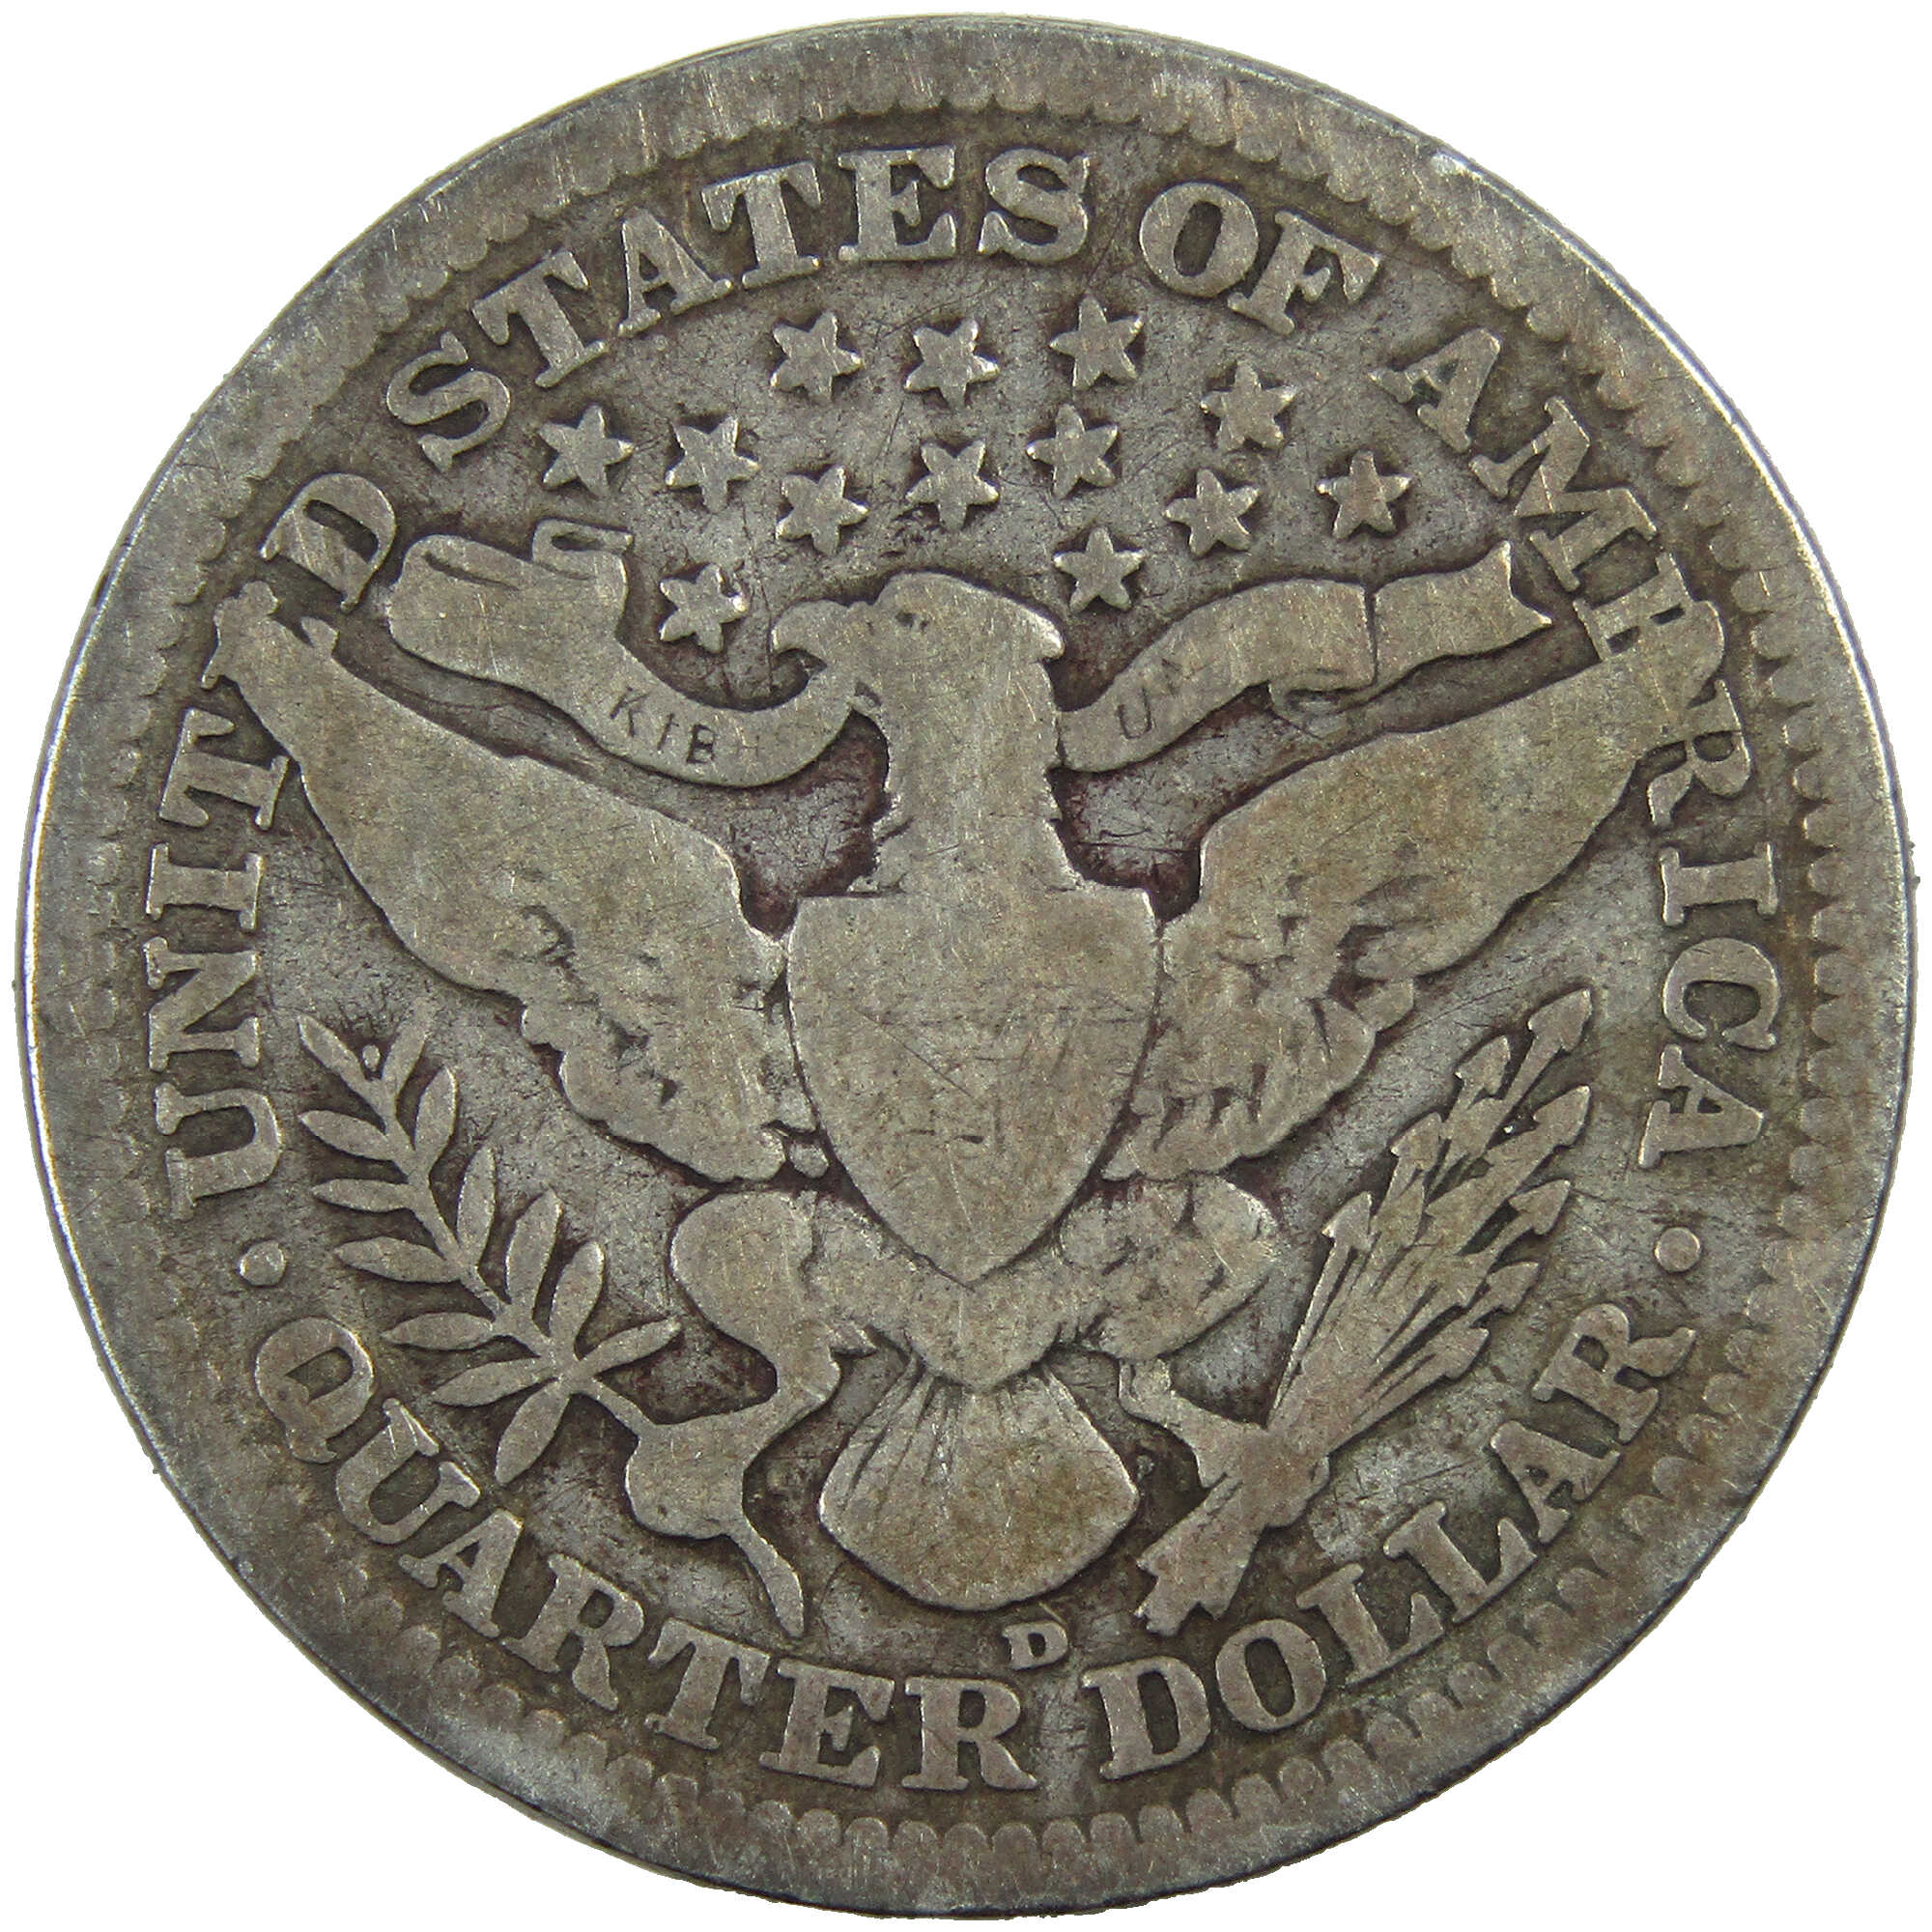 1909 D Barber Quarter G Good Silver 25c Coin SKU:I12719